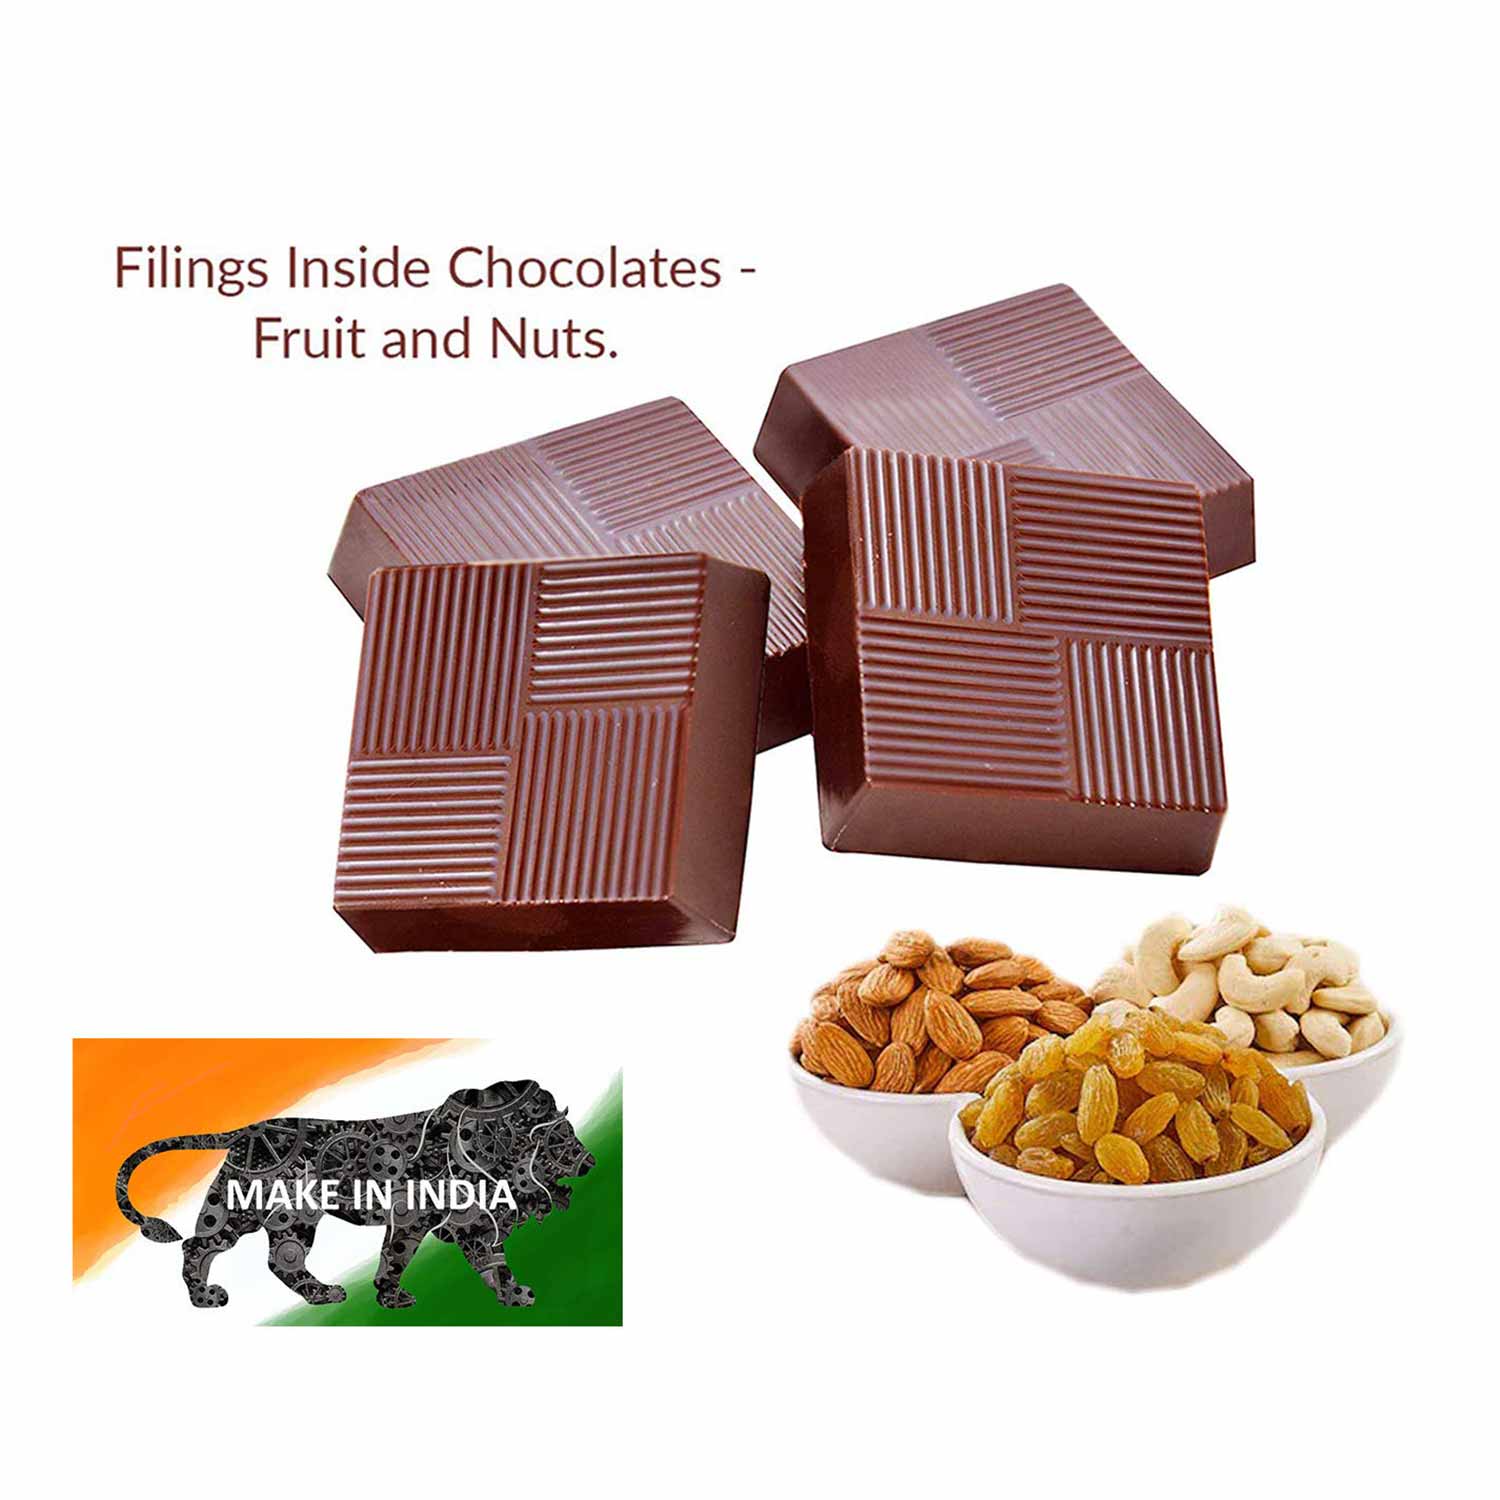 Printed chocolates with couple photo